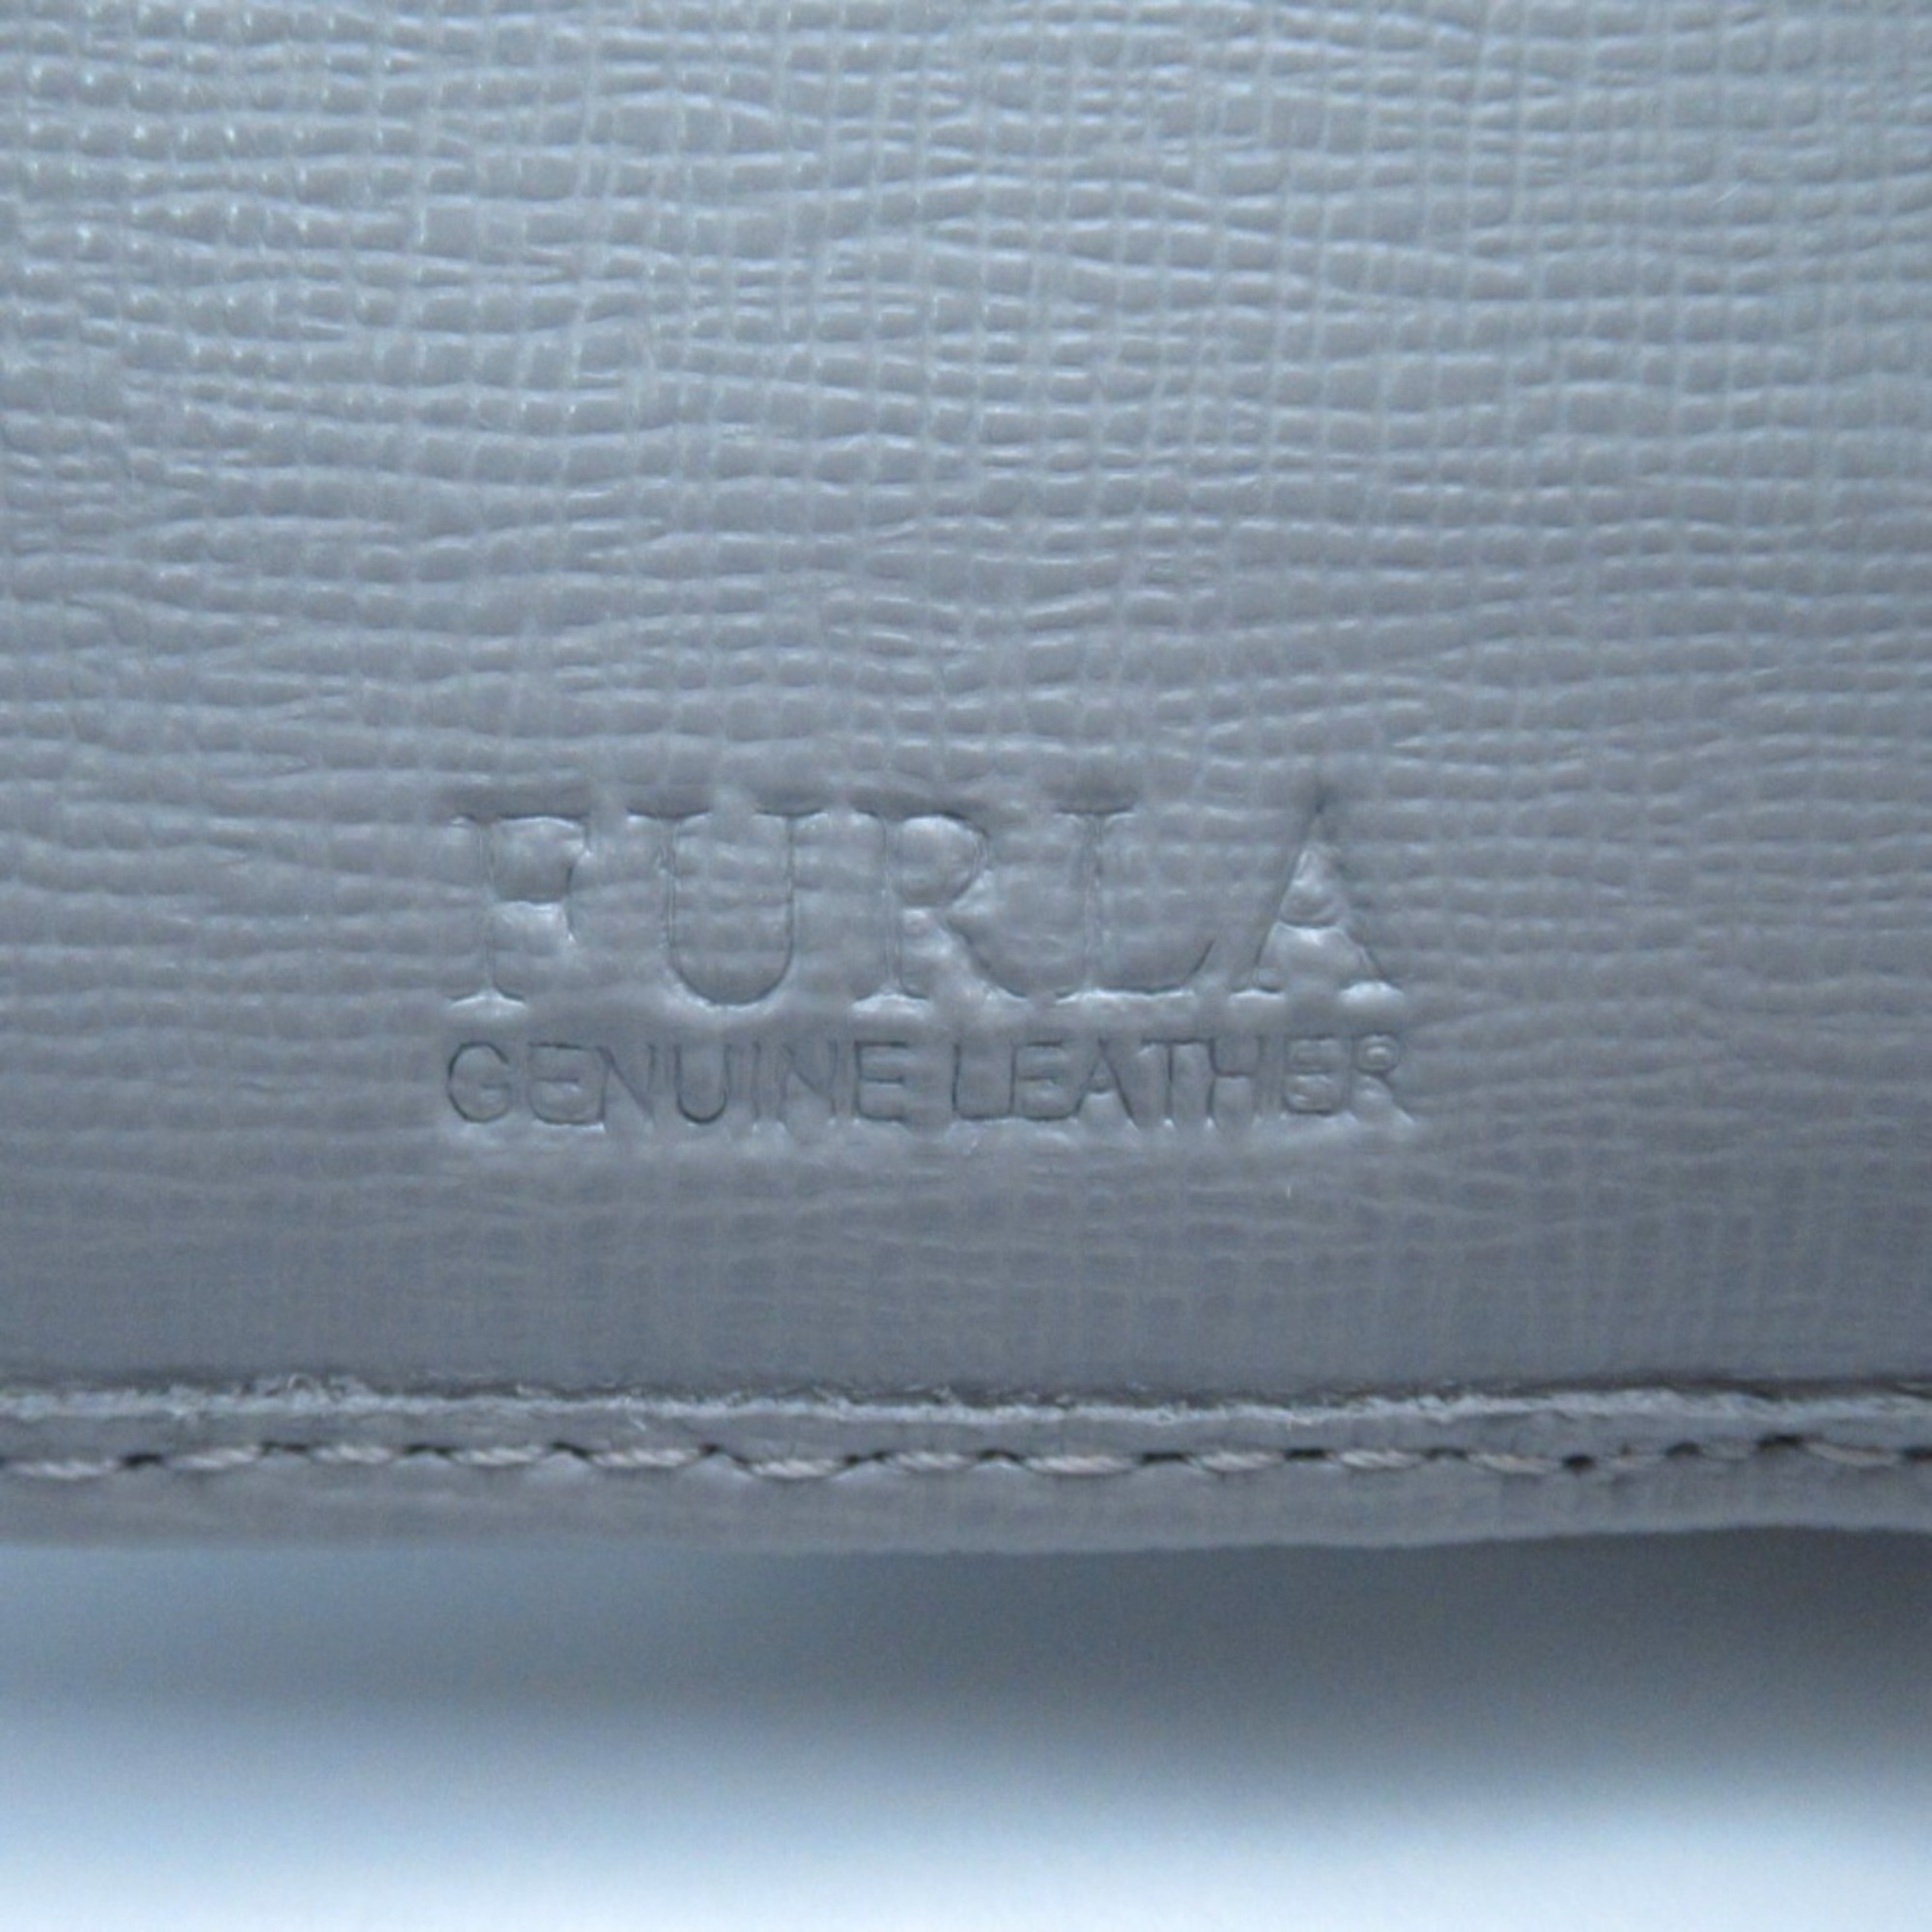 Furla Tri-fold wallet Gray leather